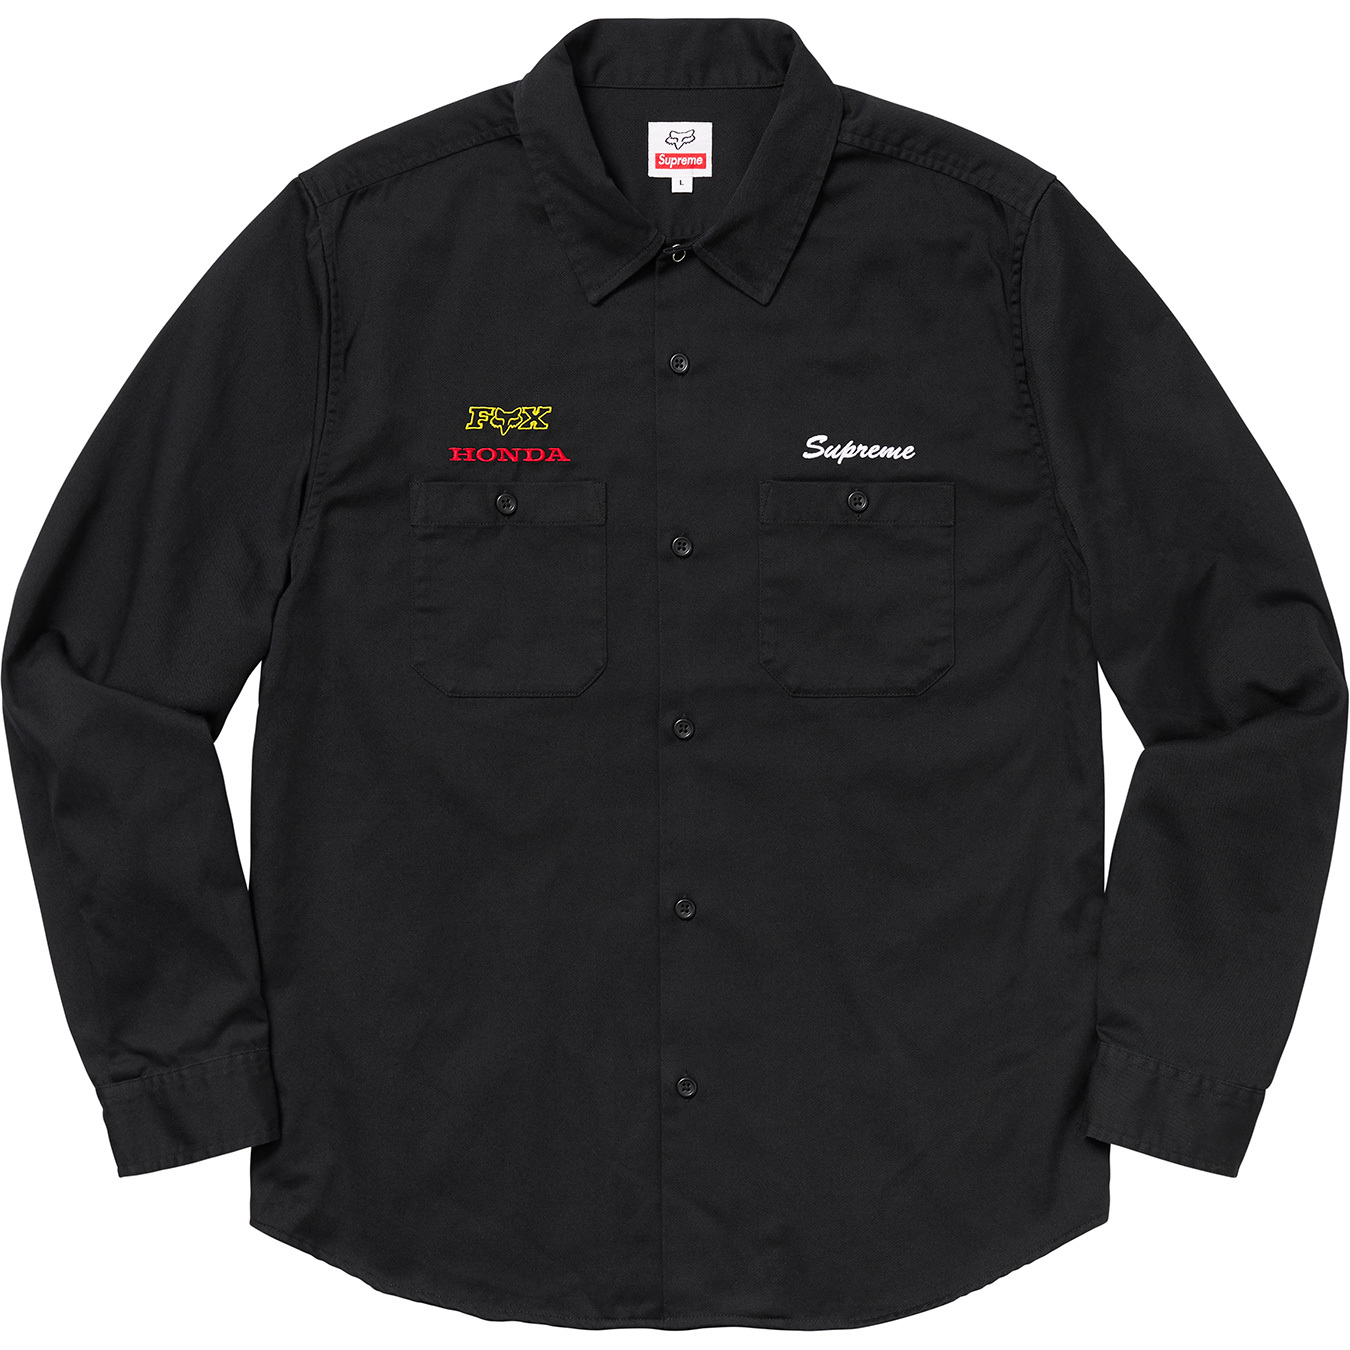 Supreme®/Honda®/Fox® Racing Work Shirt - Supreme Community